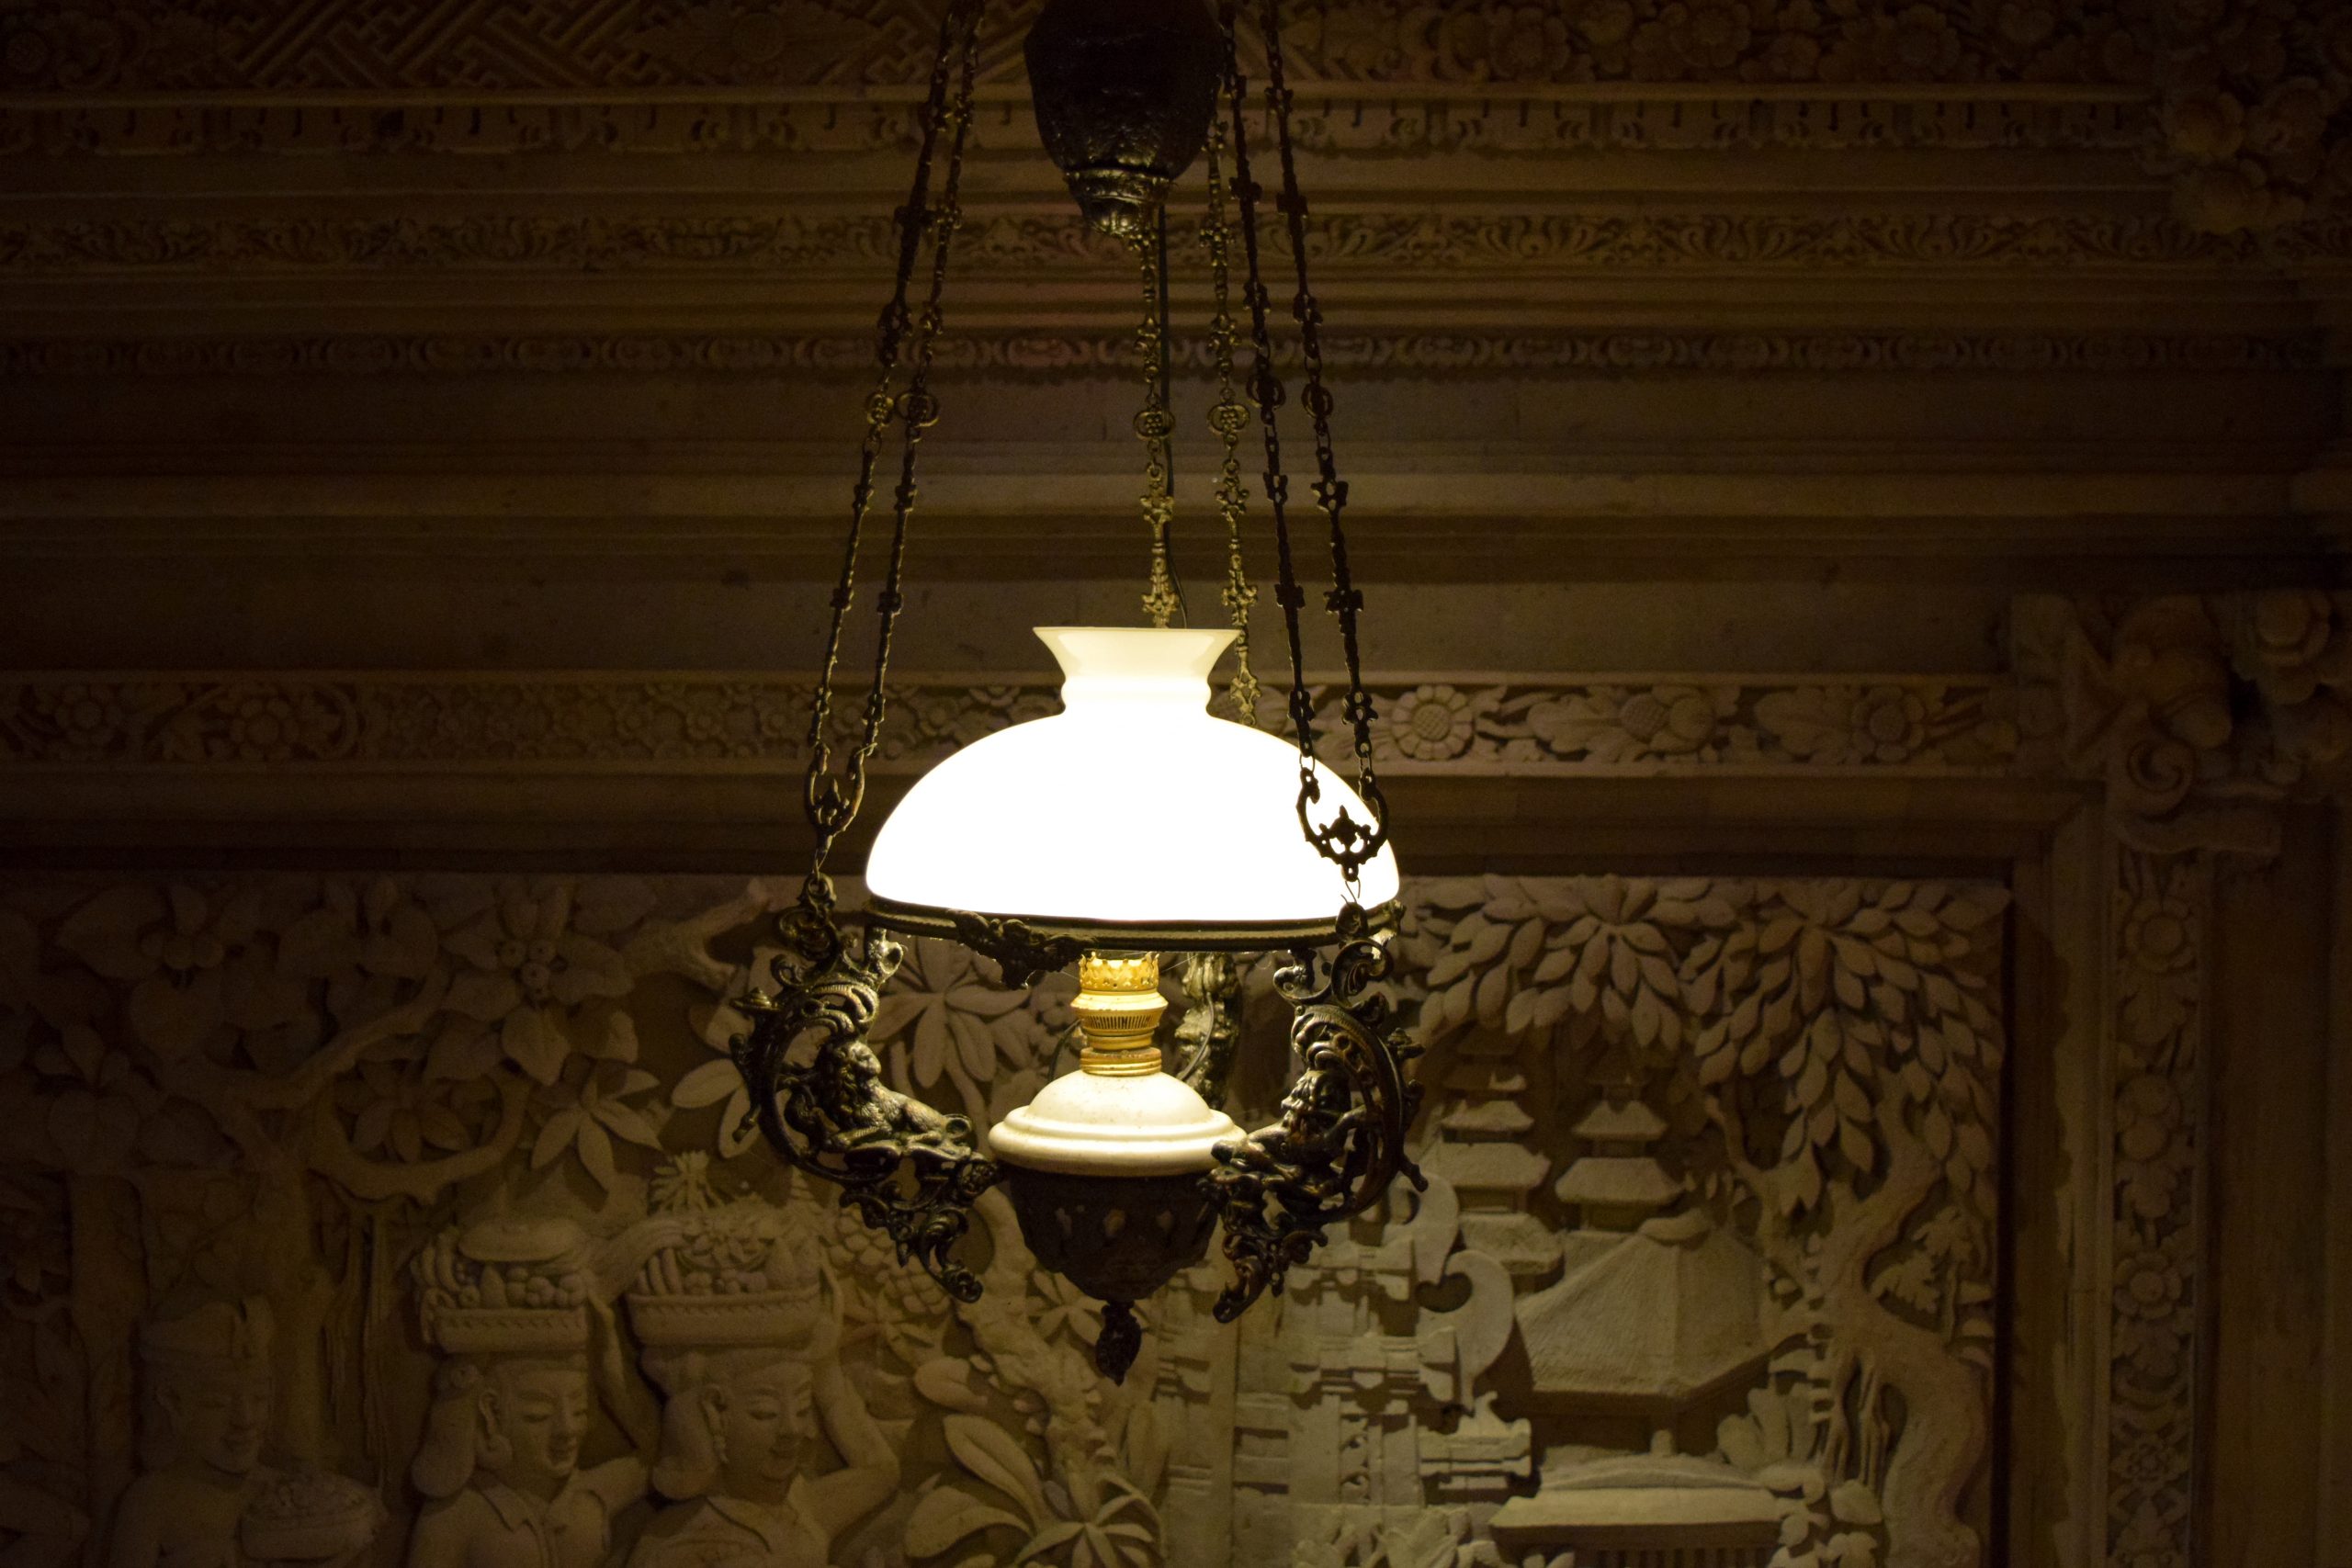 Beautiful lamp in front of carvings